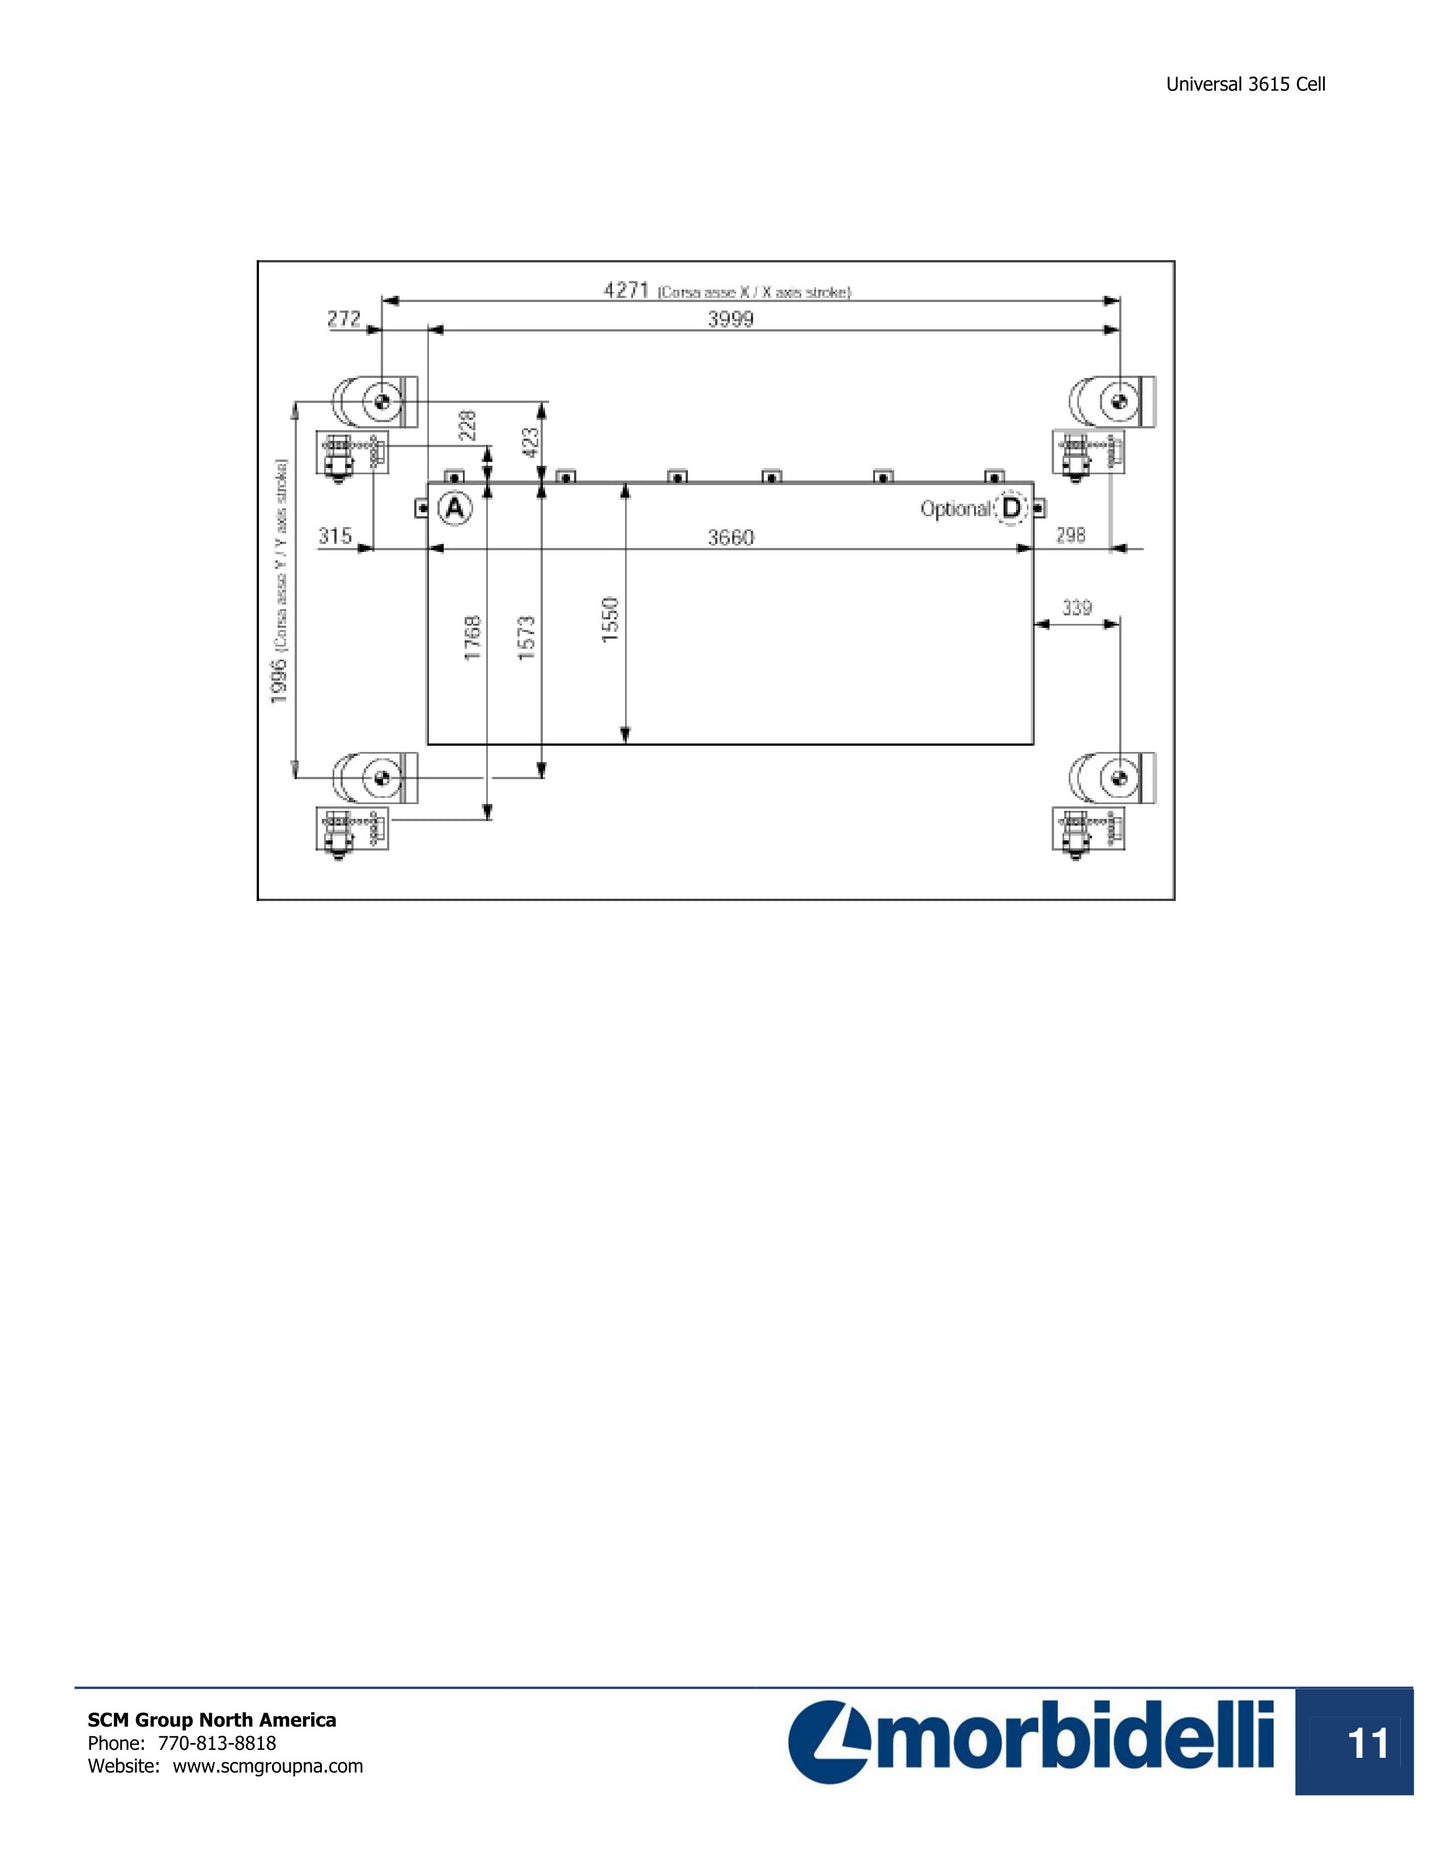 2014 Morbidelli Universal 3615 Cell CNC Router - Illinois